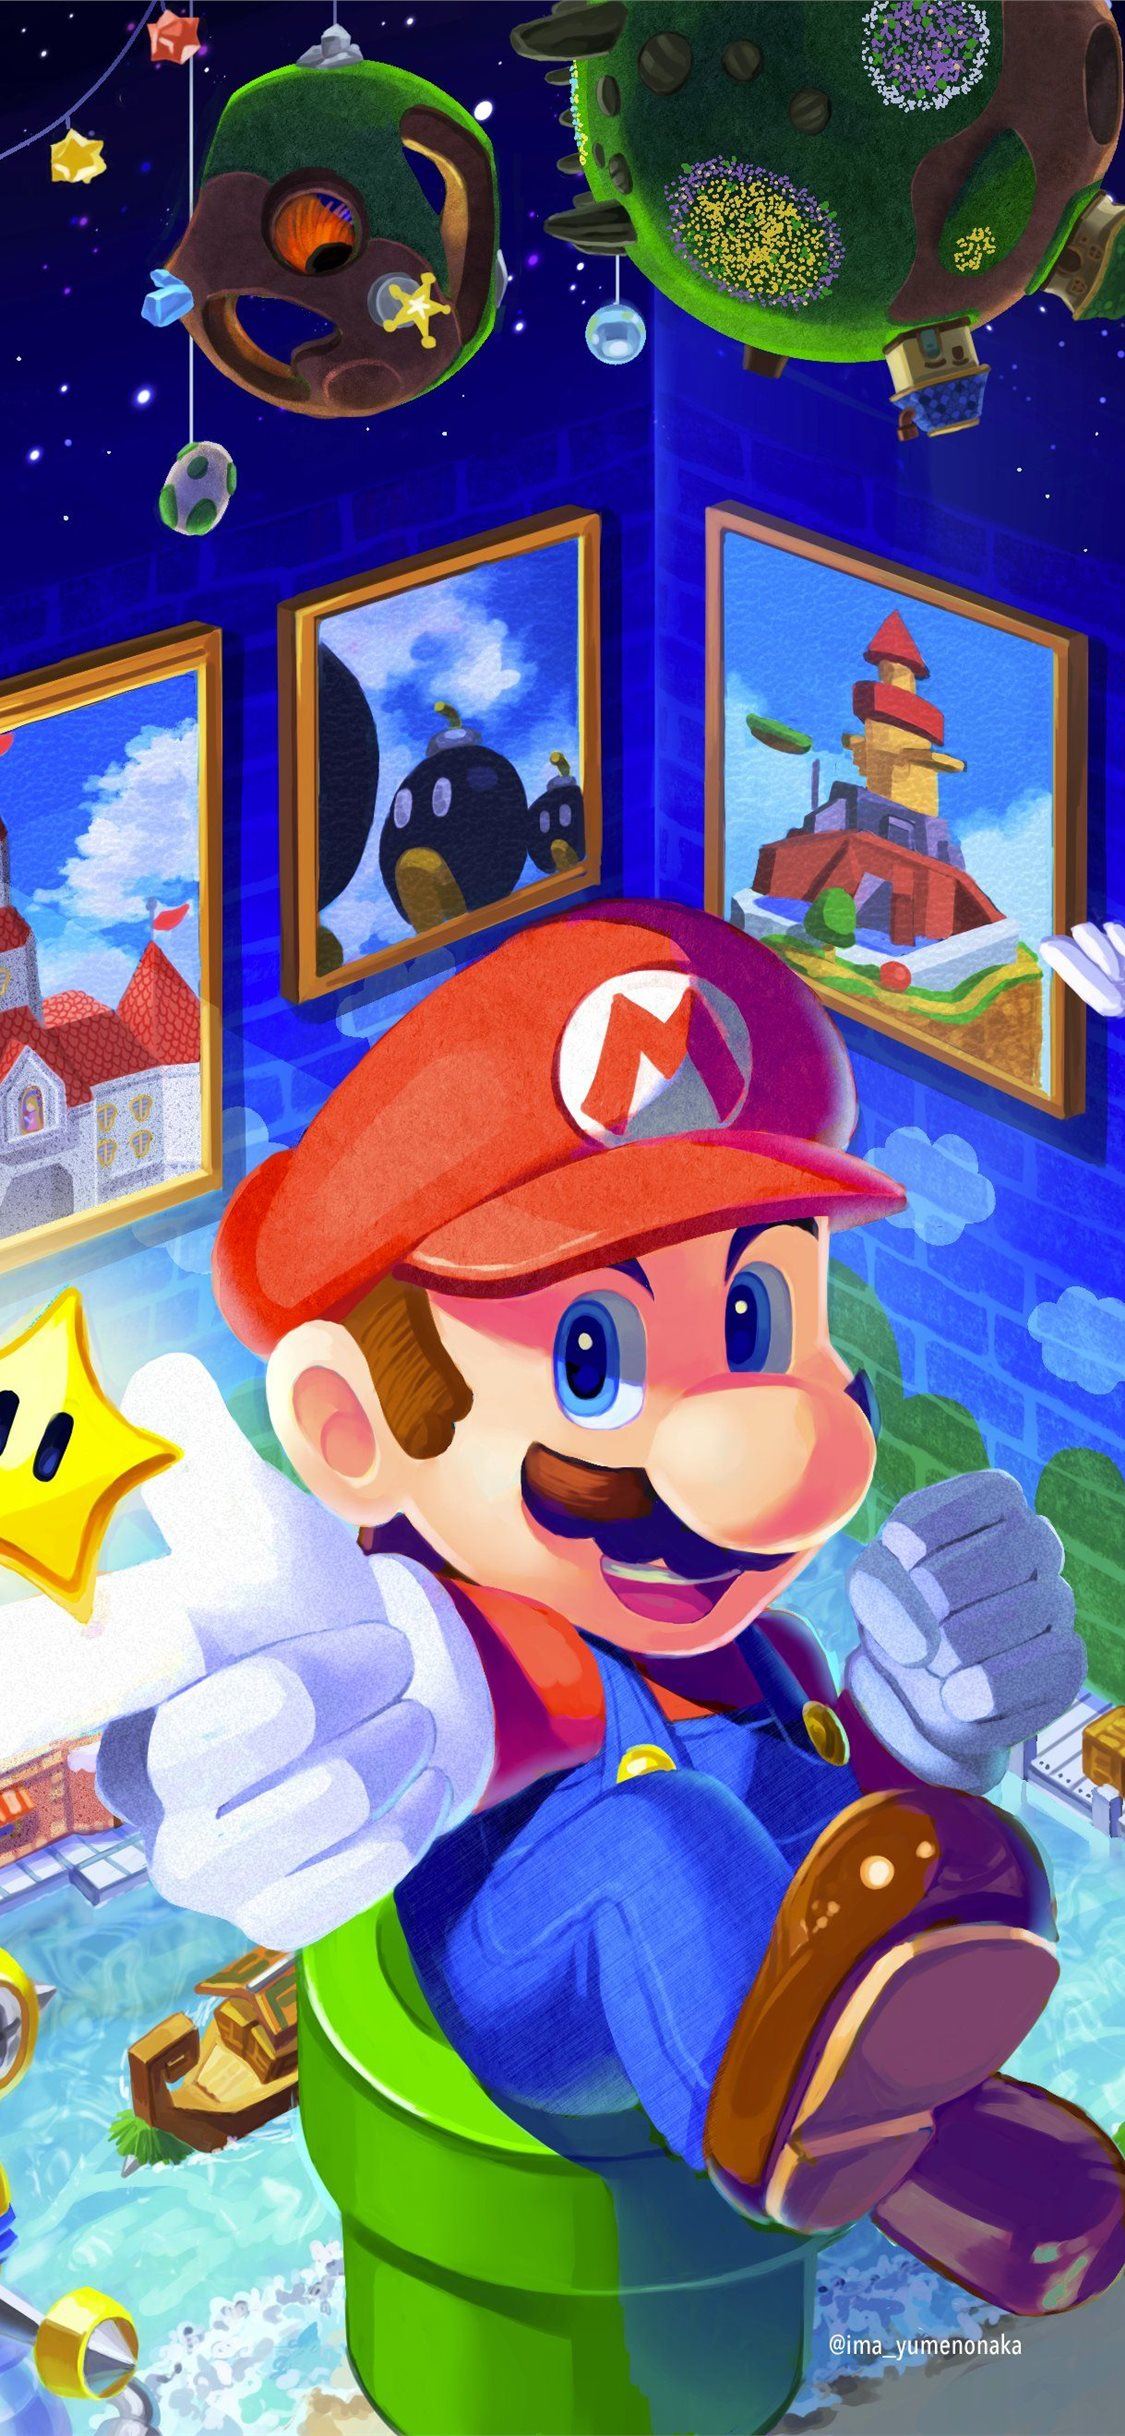 Super Mario Phone Wallpapers